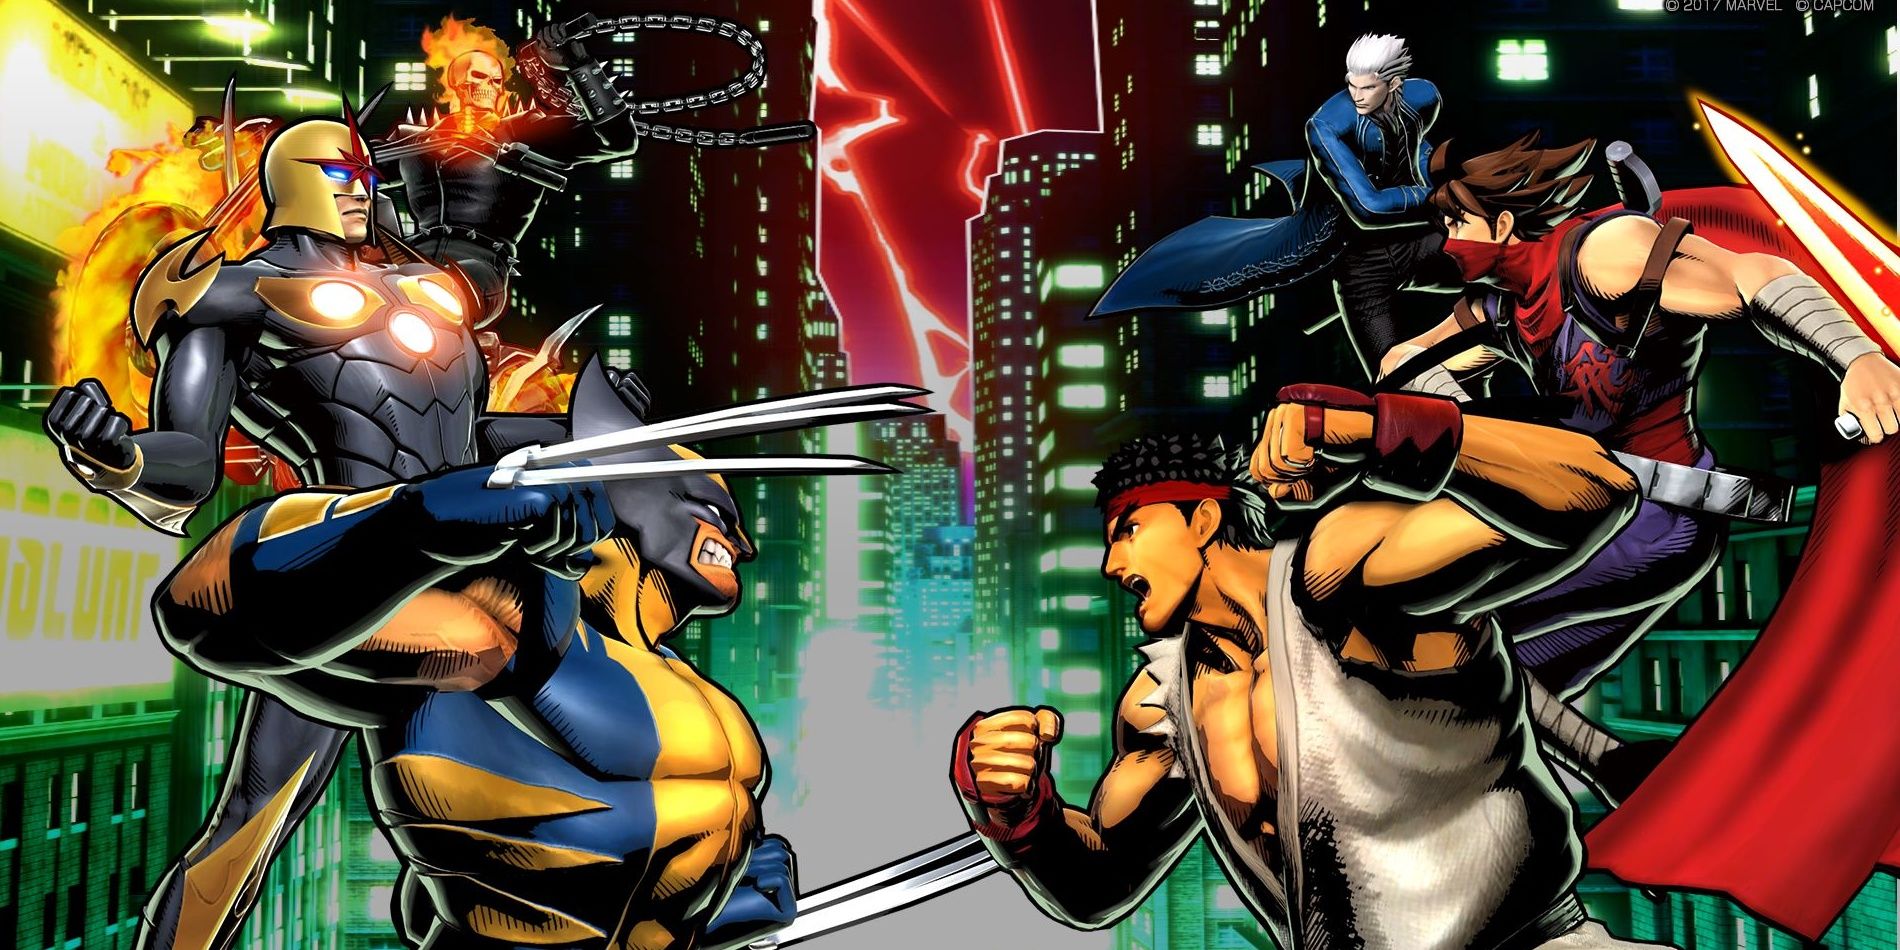 The characters clash in Marvel vs. Capcom 3